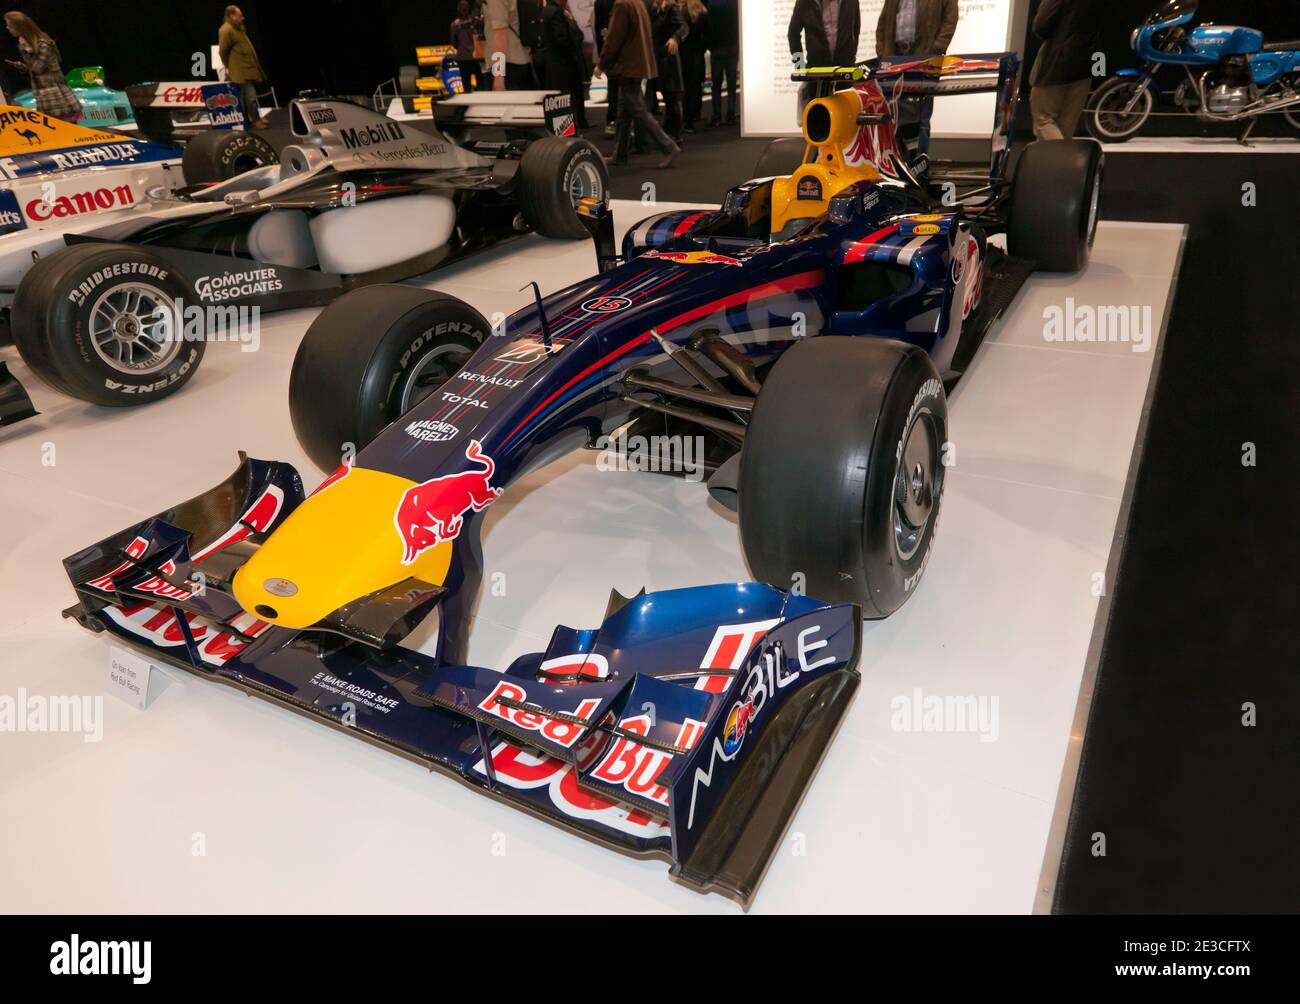 Sébastien Vettel's 2009, RB5, Formula One Car, designed by Adrian Newey, on display at the 2015 London Classic Car Show Stock Photo - Alamy